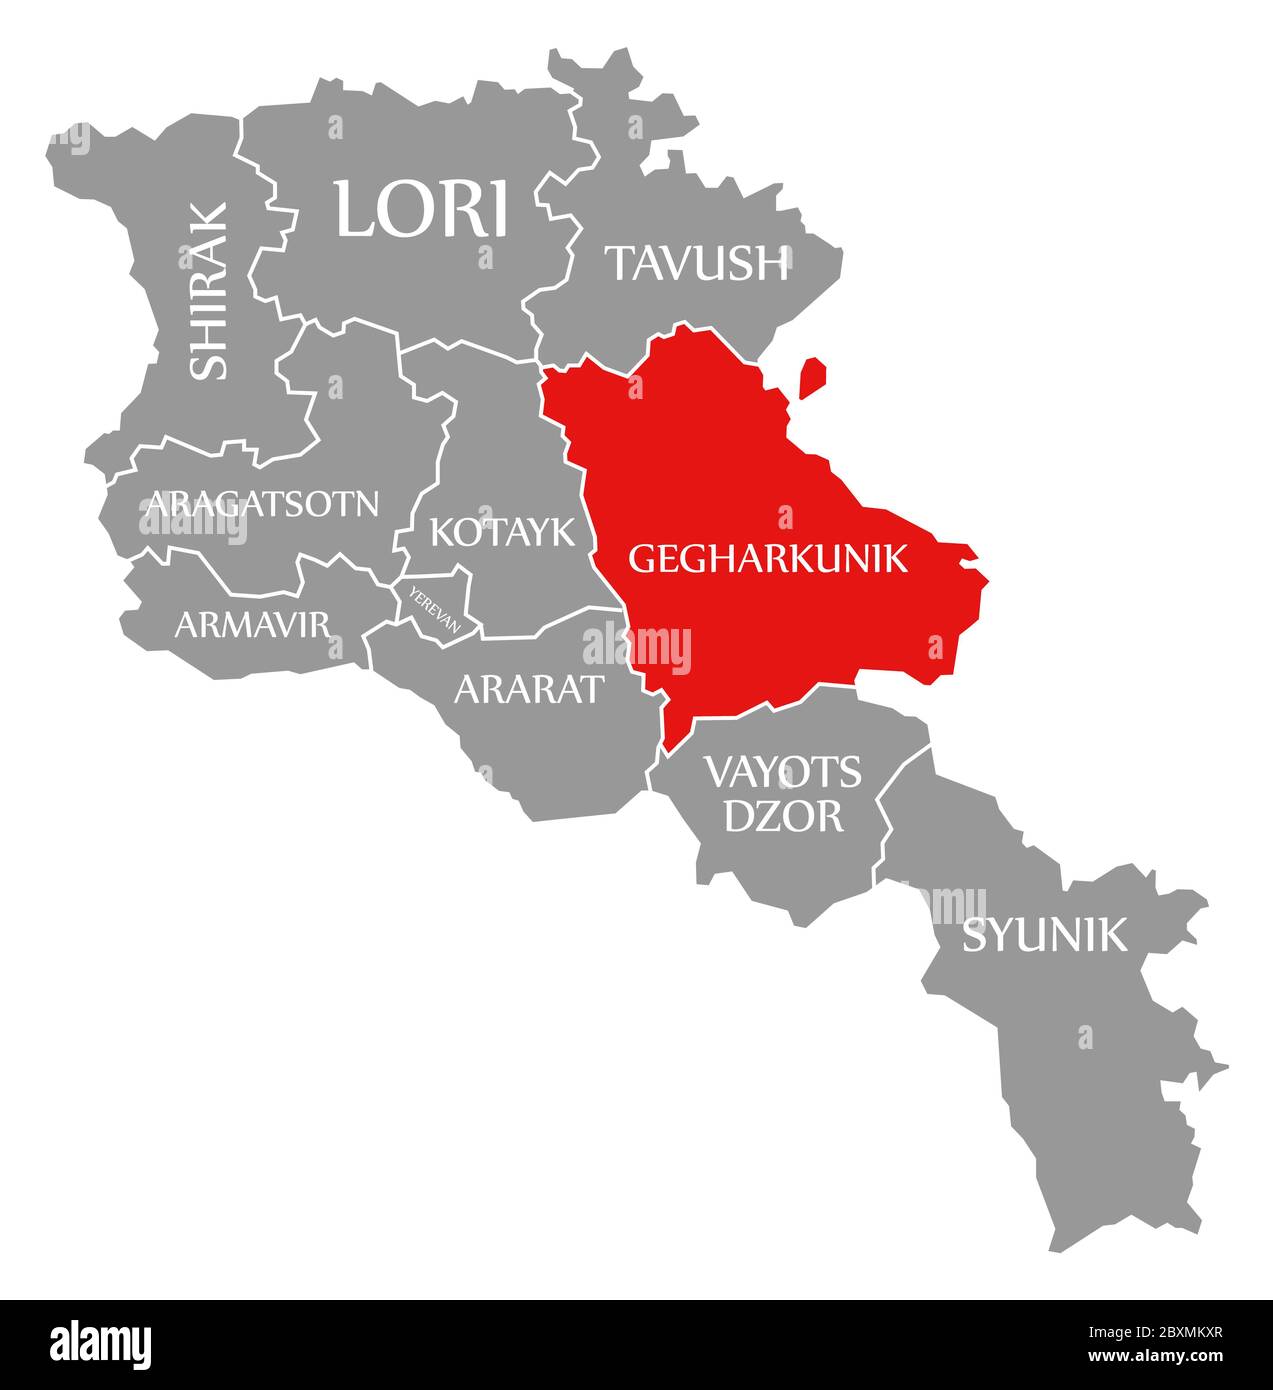 Gegharkunik red highlighted in map of Armenia Stock Photo